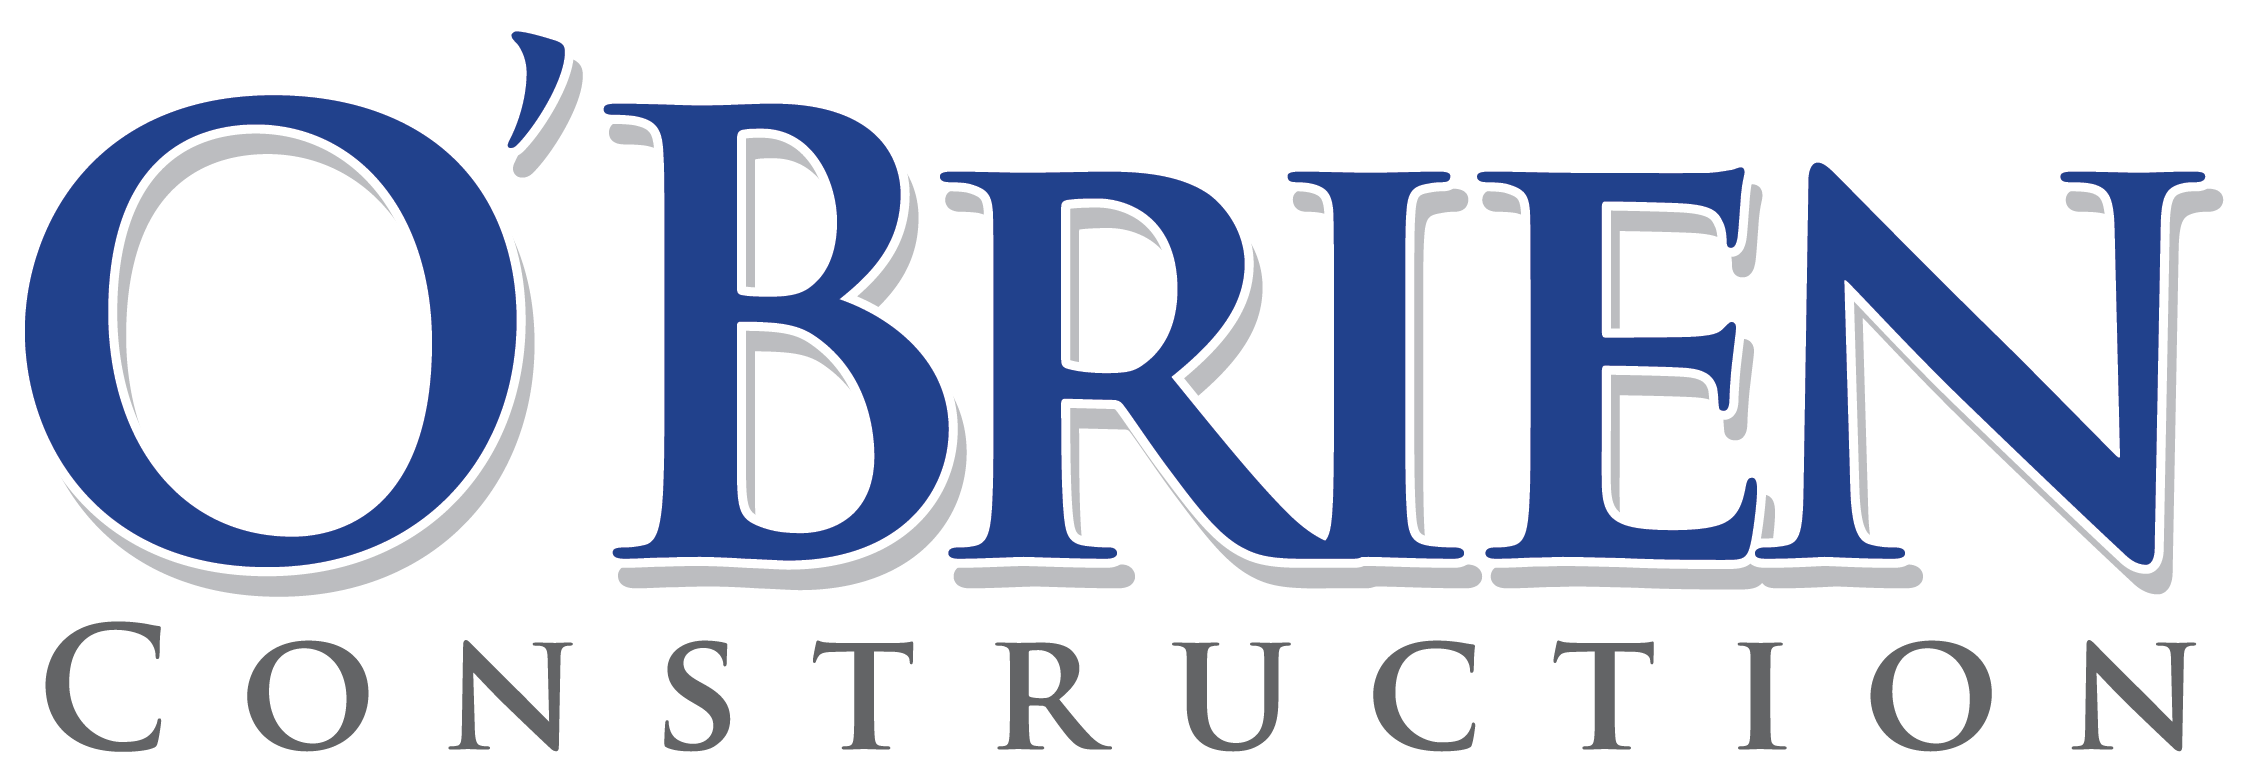 O'Brien Construction Company, Inc. logo